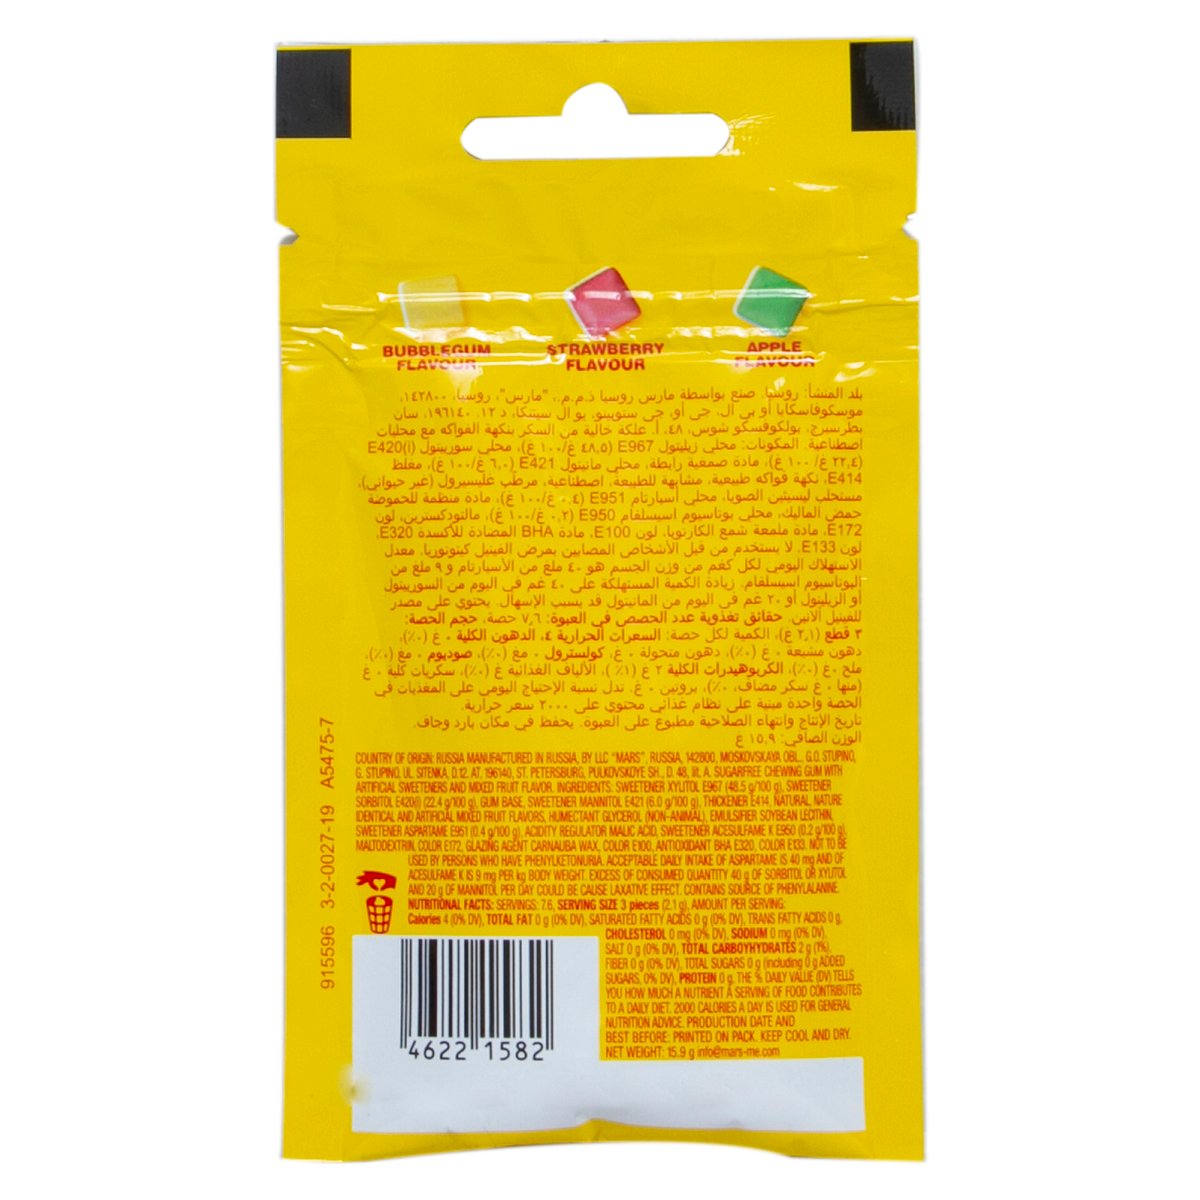 Starburst Fruity Mixies Chewing Gum 15.9 g